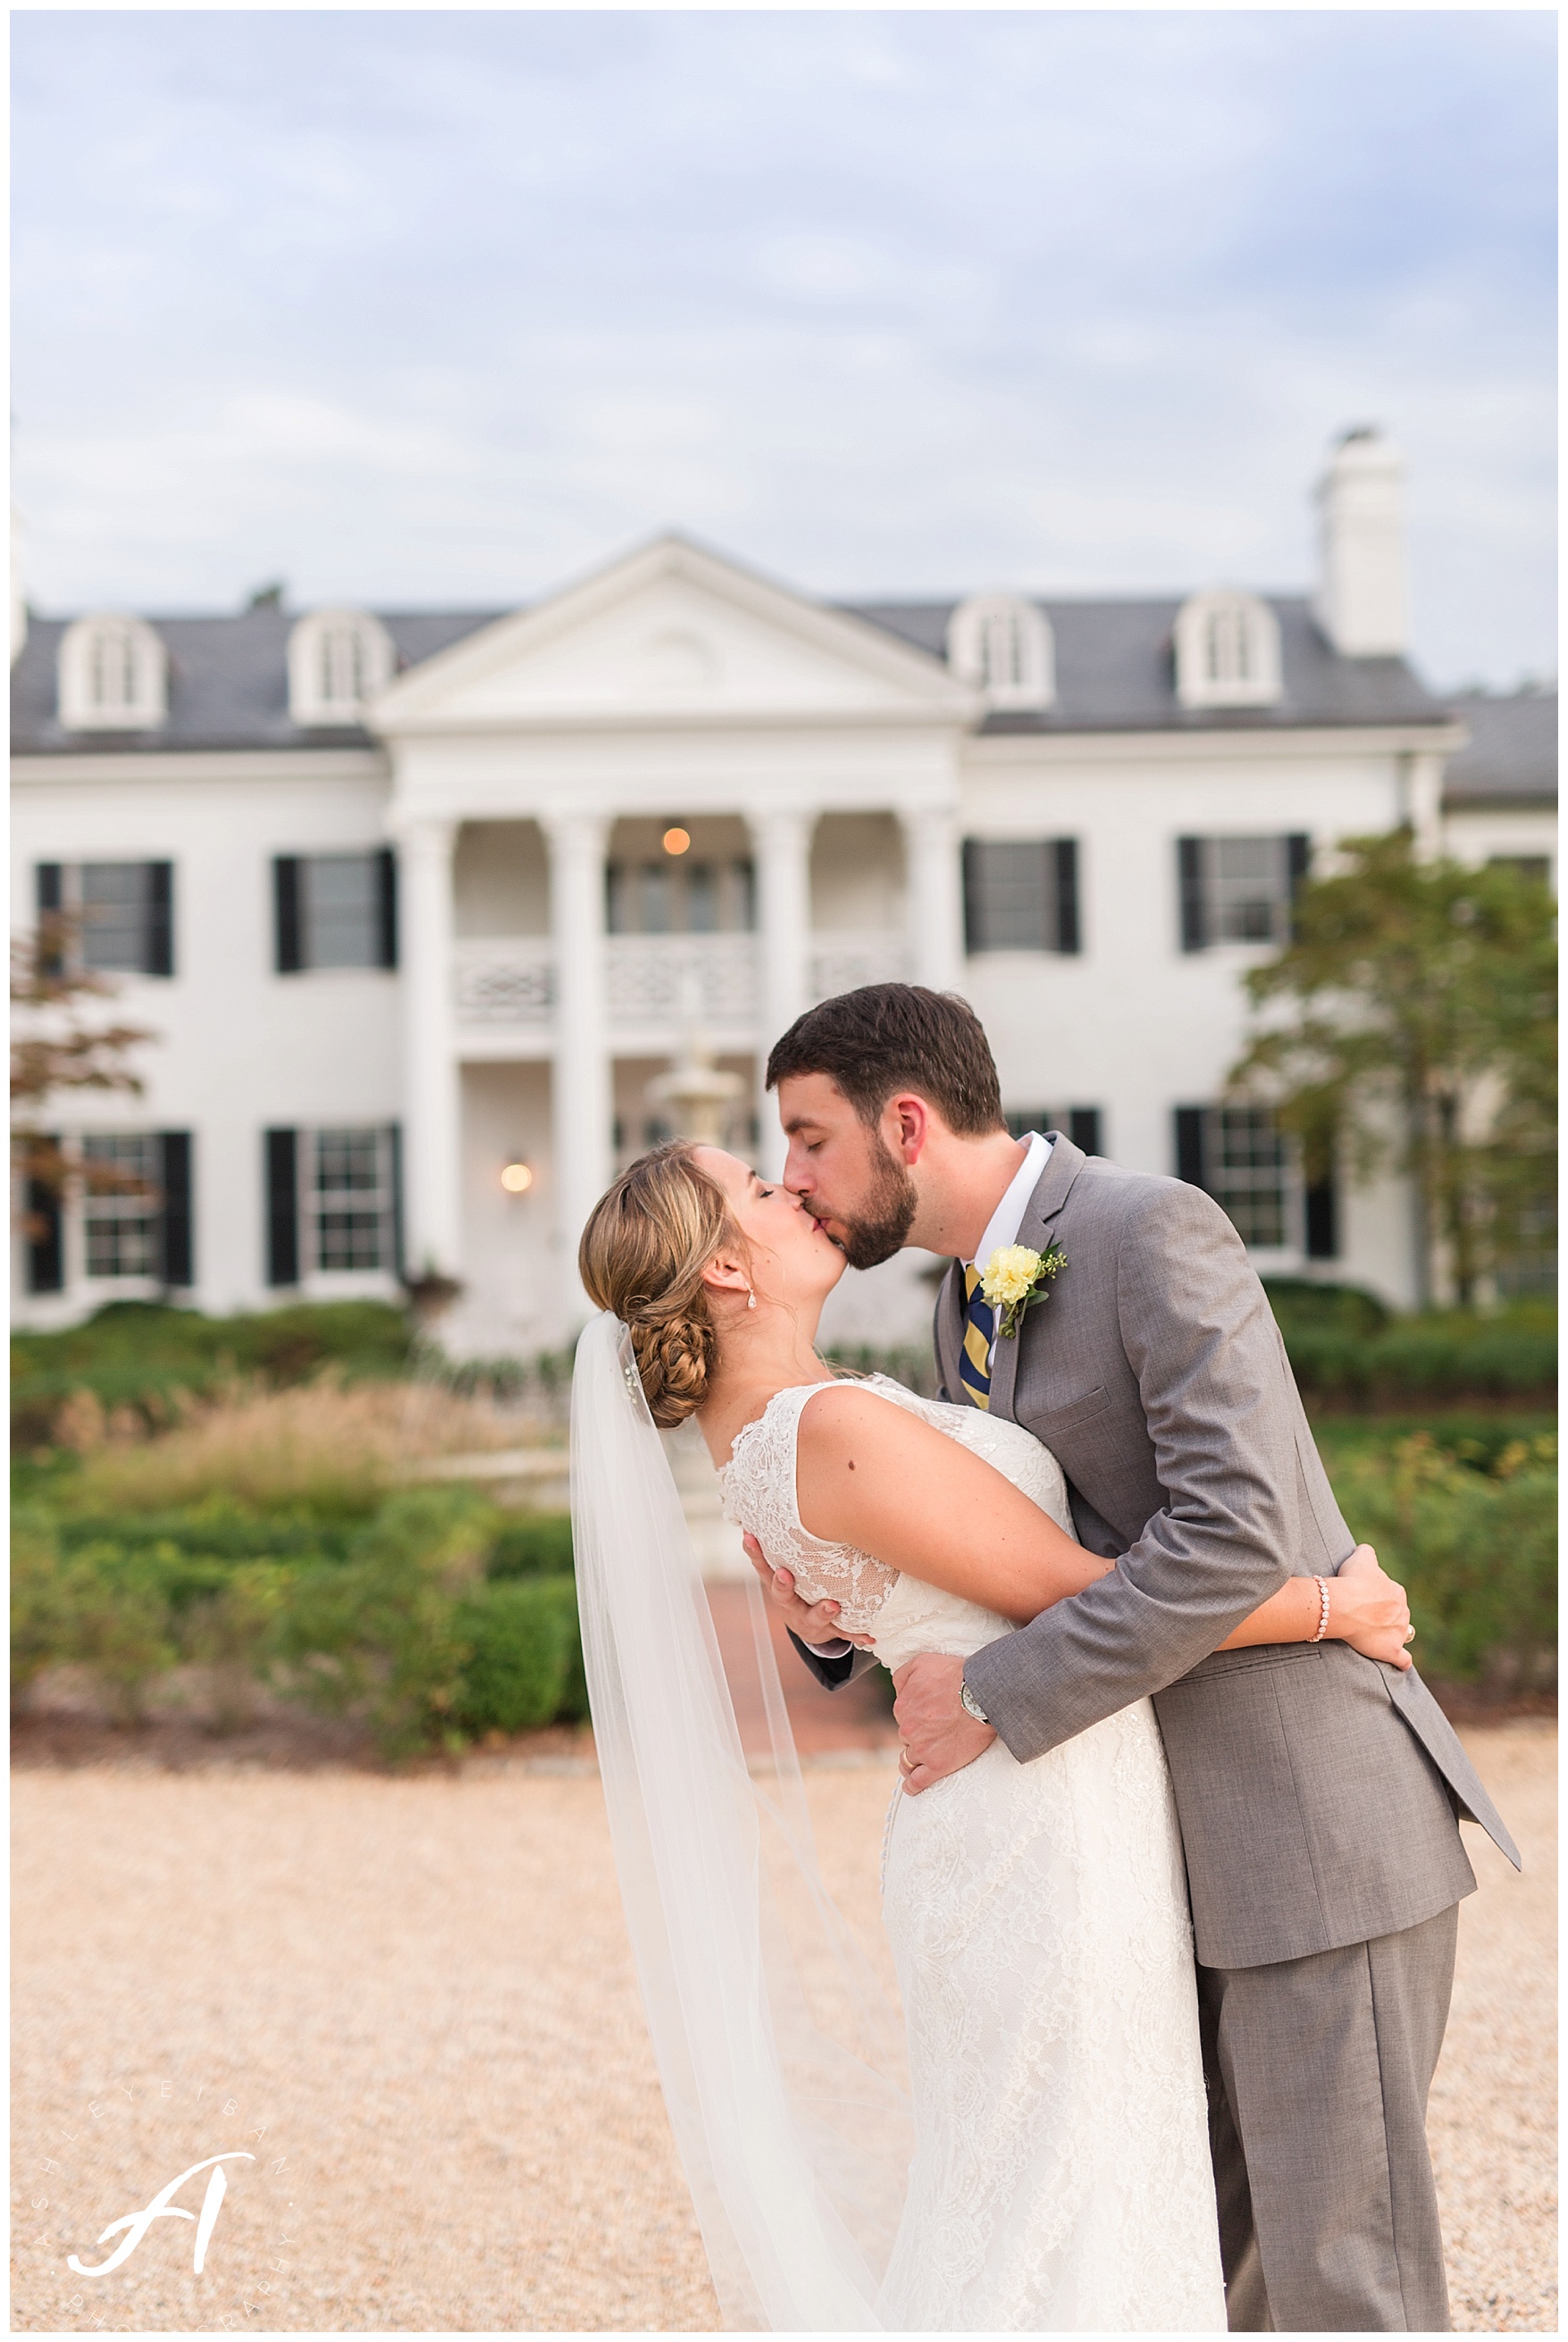 Keswick Vineyard Wedding Photographer || Charlottesville Winery Wedding Photographer || Central Virginia Fall Wedding || www.ashleyeiban.com